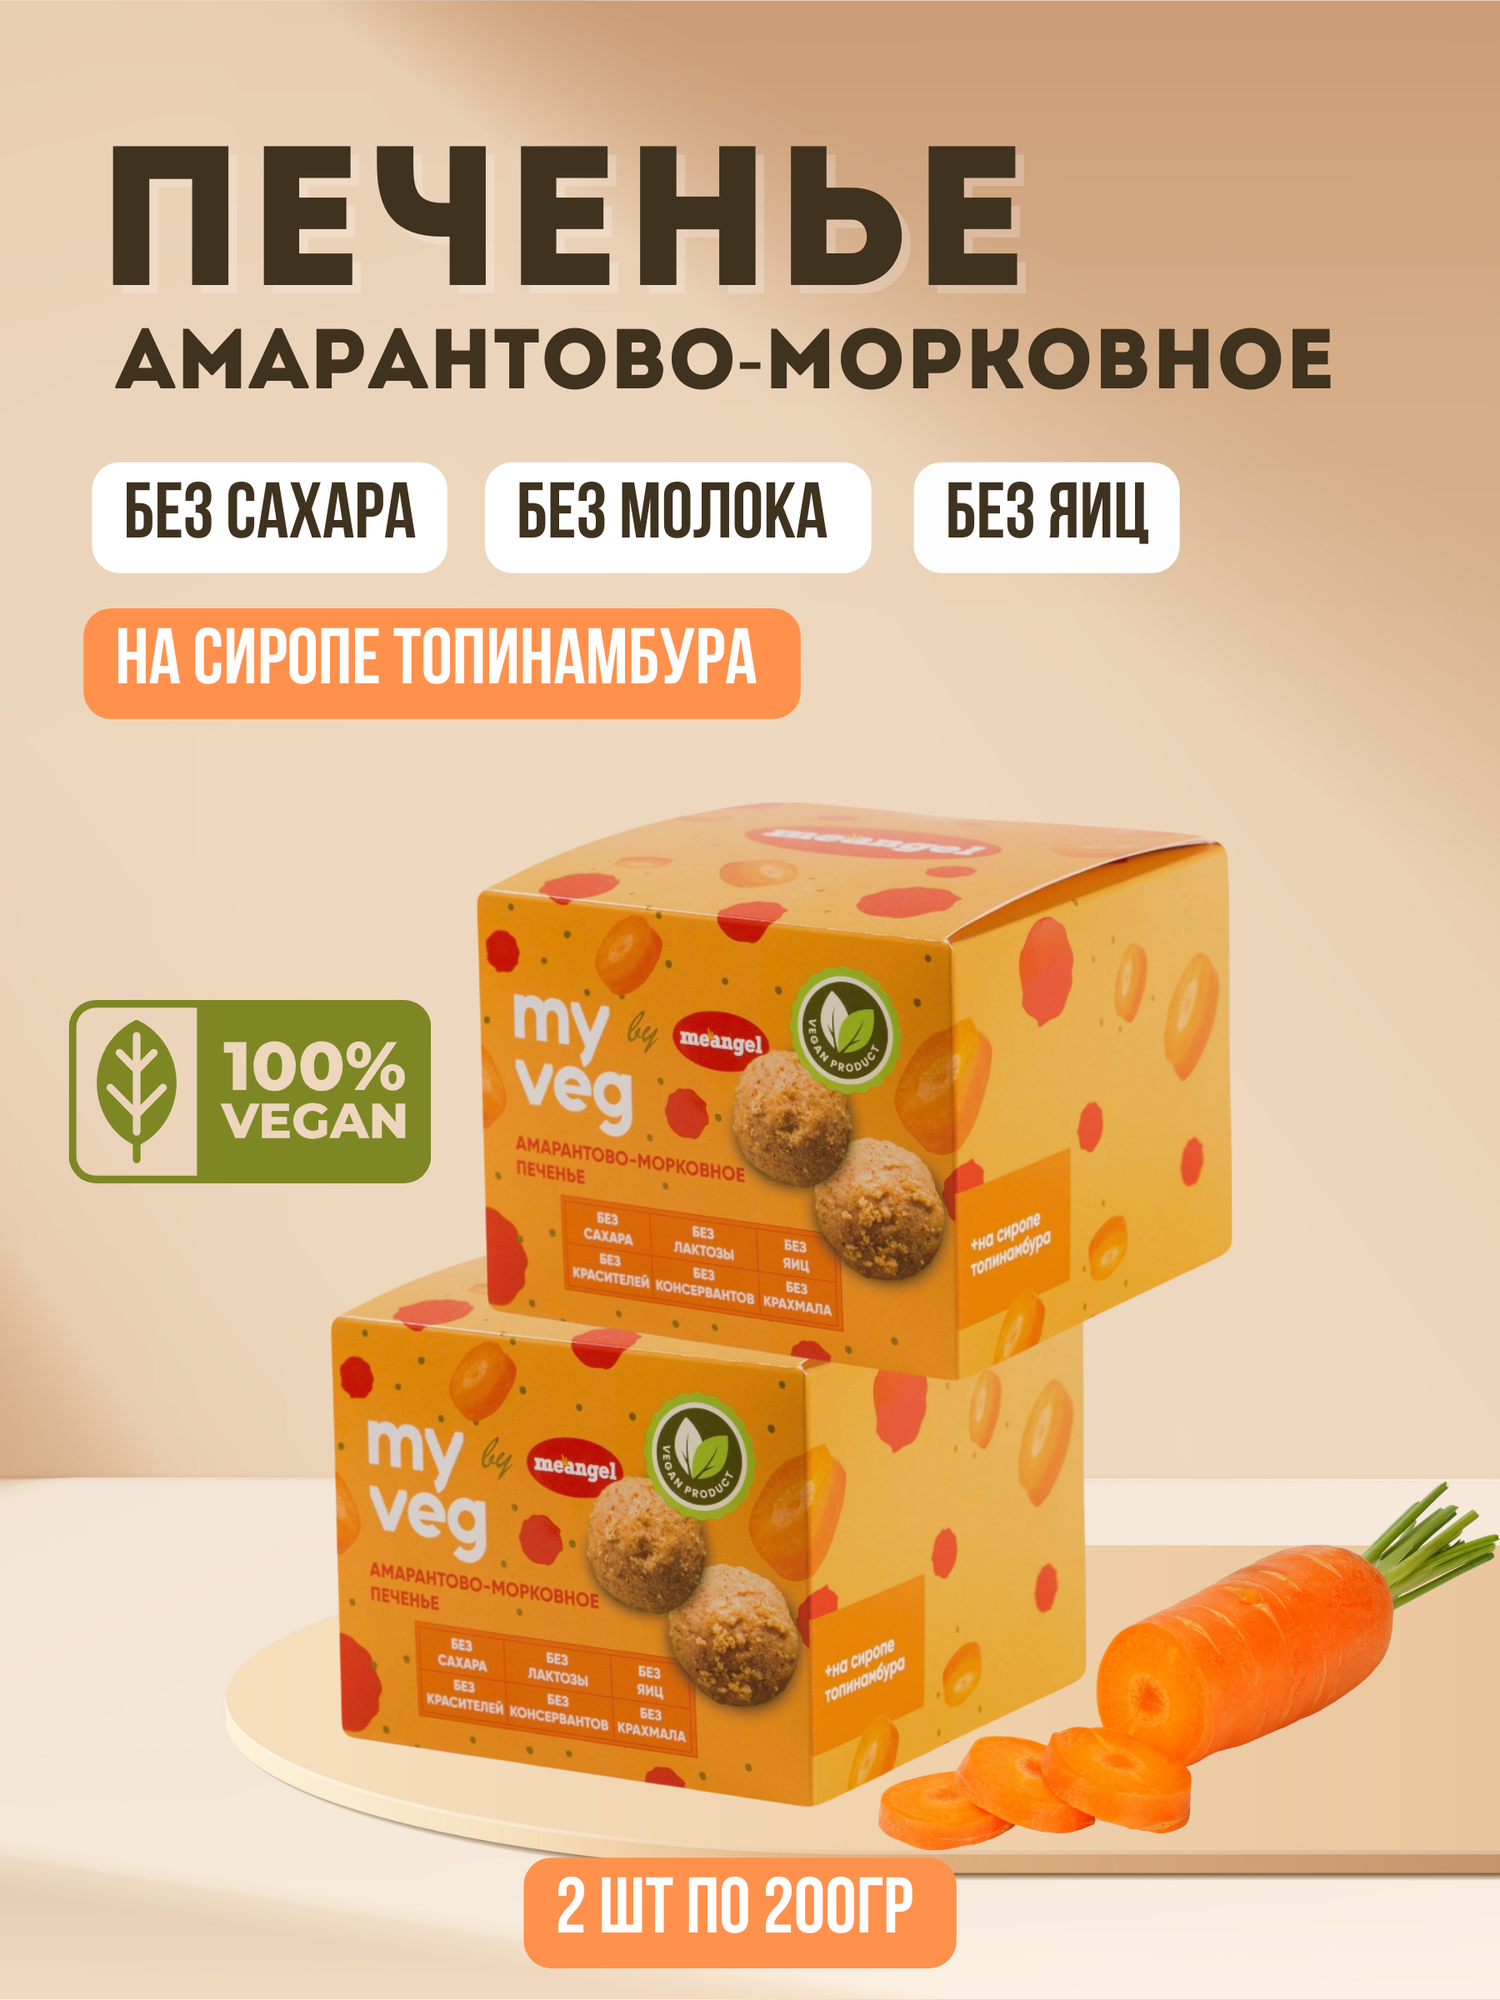 Печенье амарантово-морковное "My veg" без глютена, сахара, яиц, лактозы, 200 гр (2 шт в наборе)